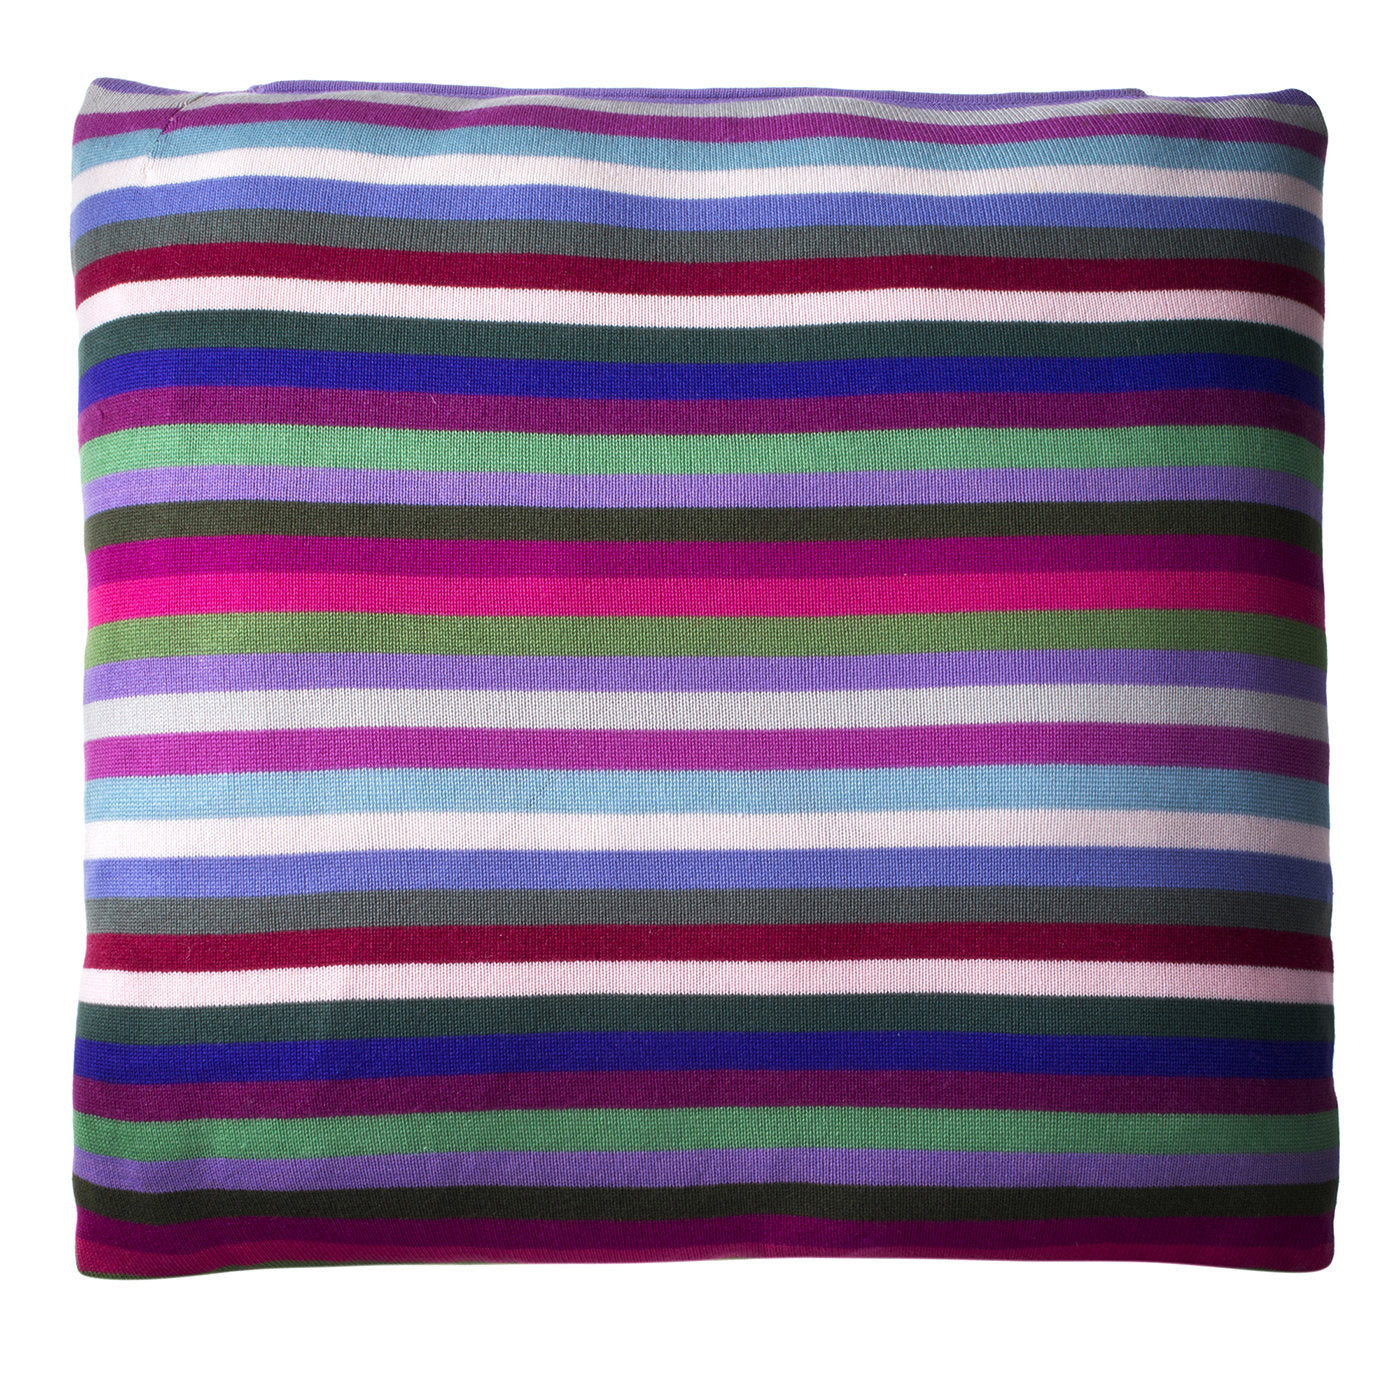 Large Multicolor Stripe Square Cushion #1 - Alternative view 1